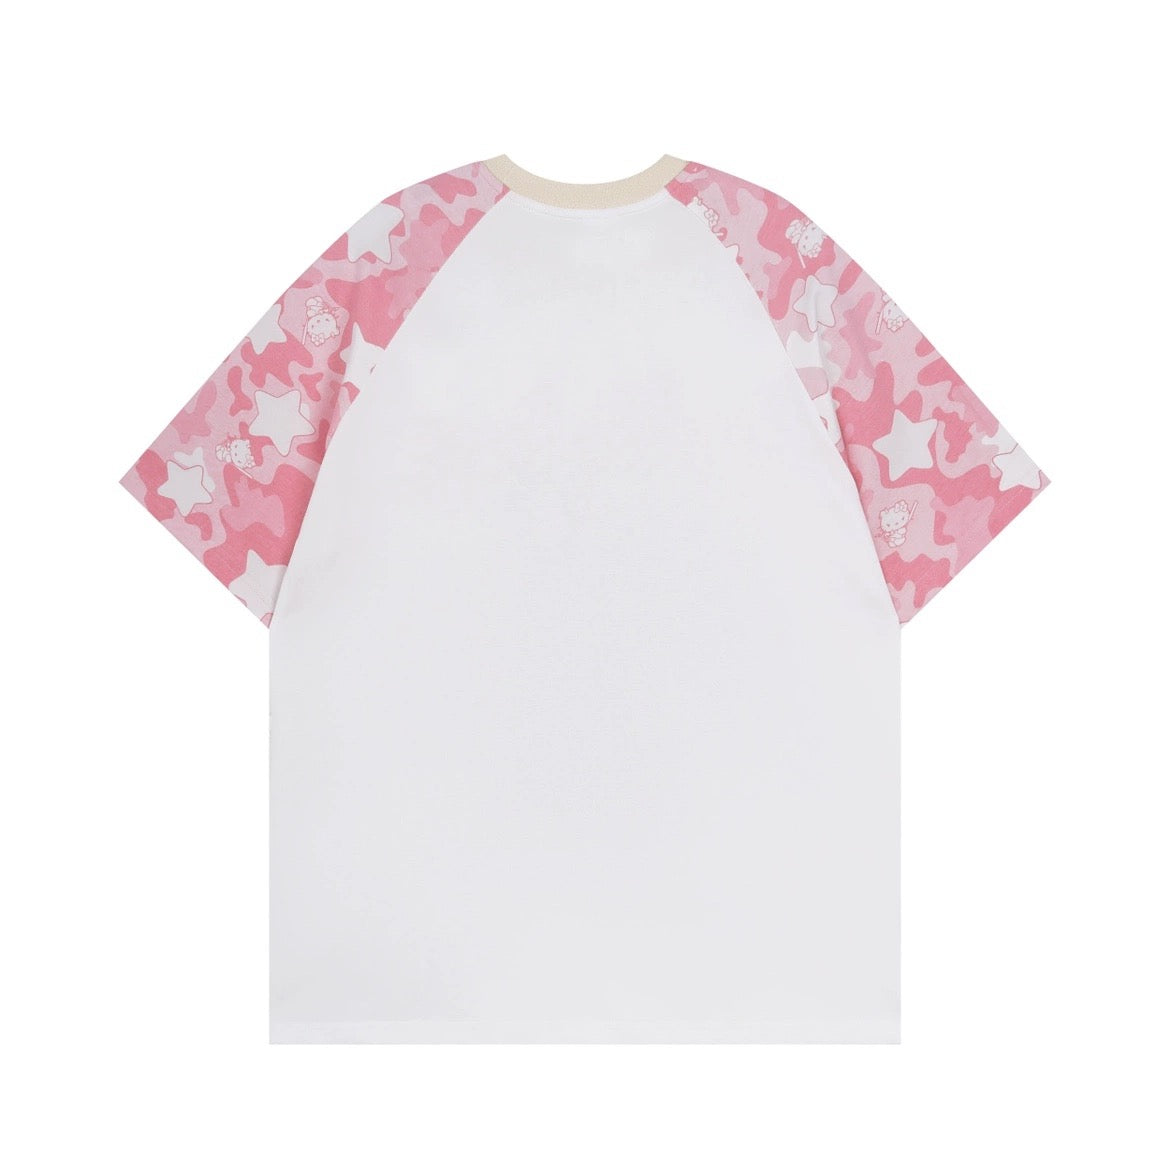 Hellokitty Camouflage Sleeves Short Sleeve Tee Casual Summer T Shirt Top